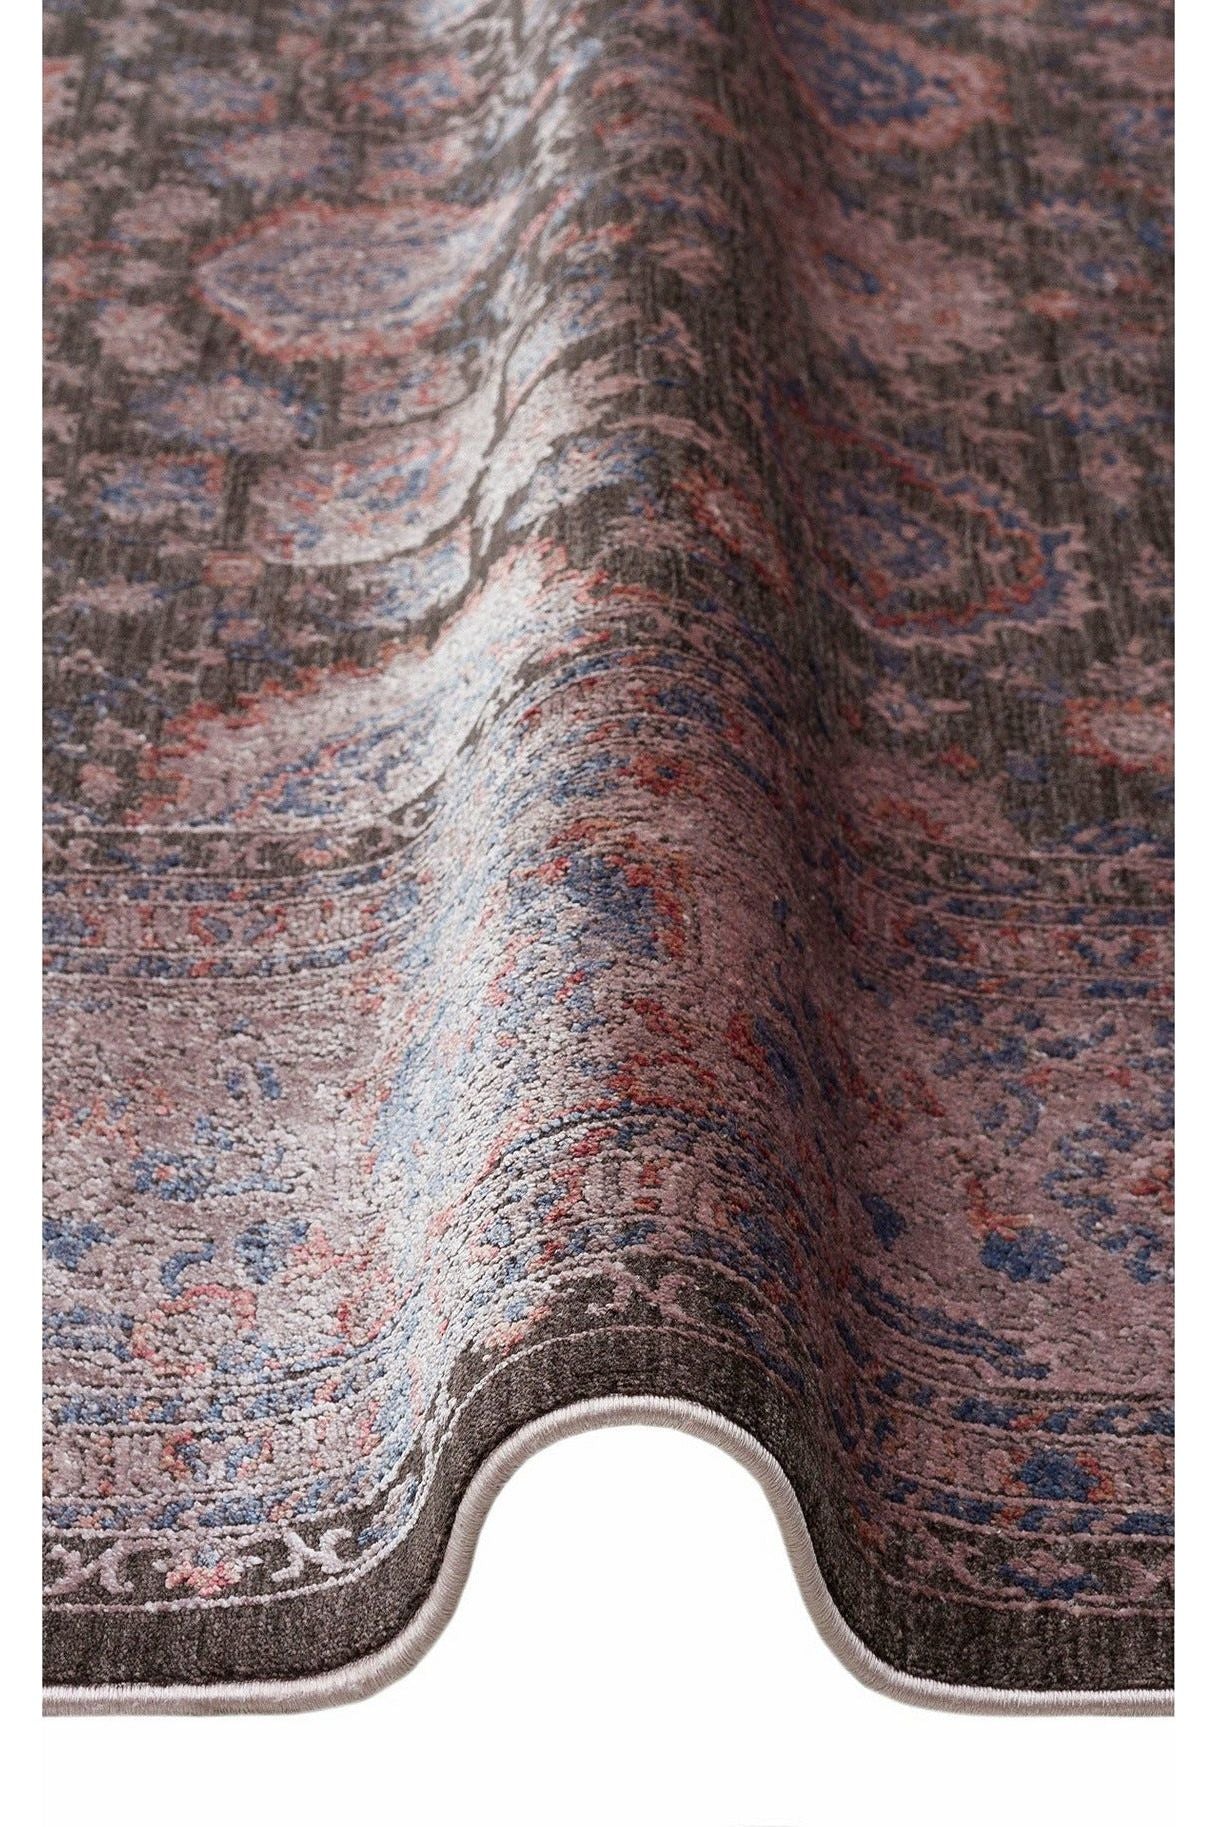 #Turkish_Carpets_Rugs# #Modern_Carpets# #Abrash_Carpets#Lhr 01 Bronze